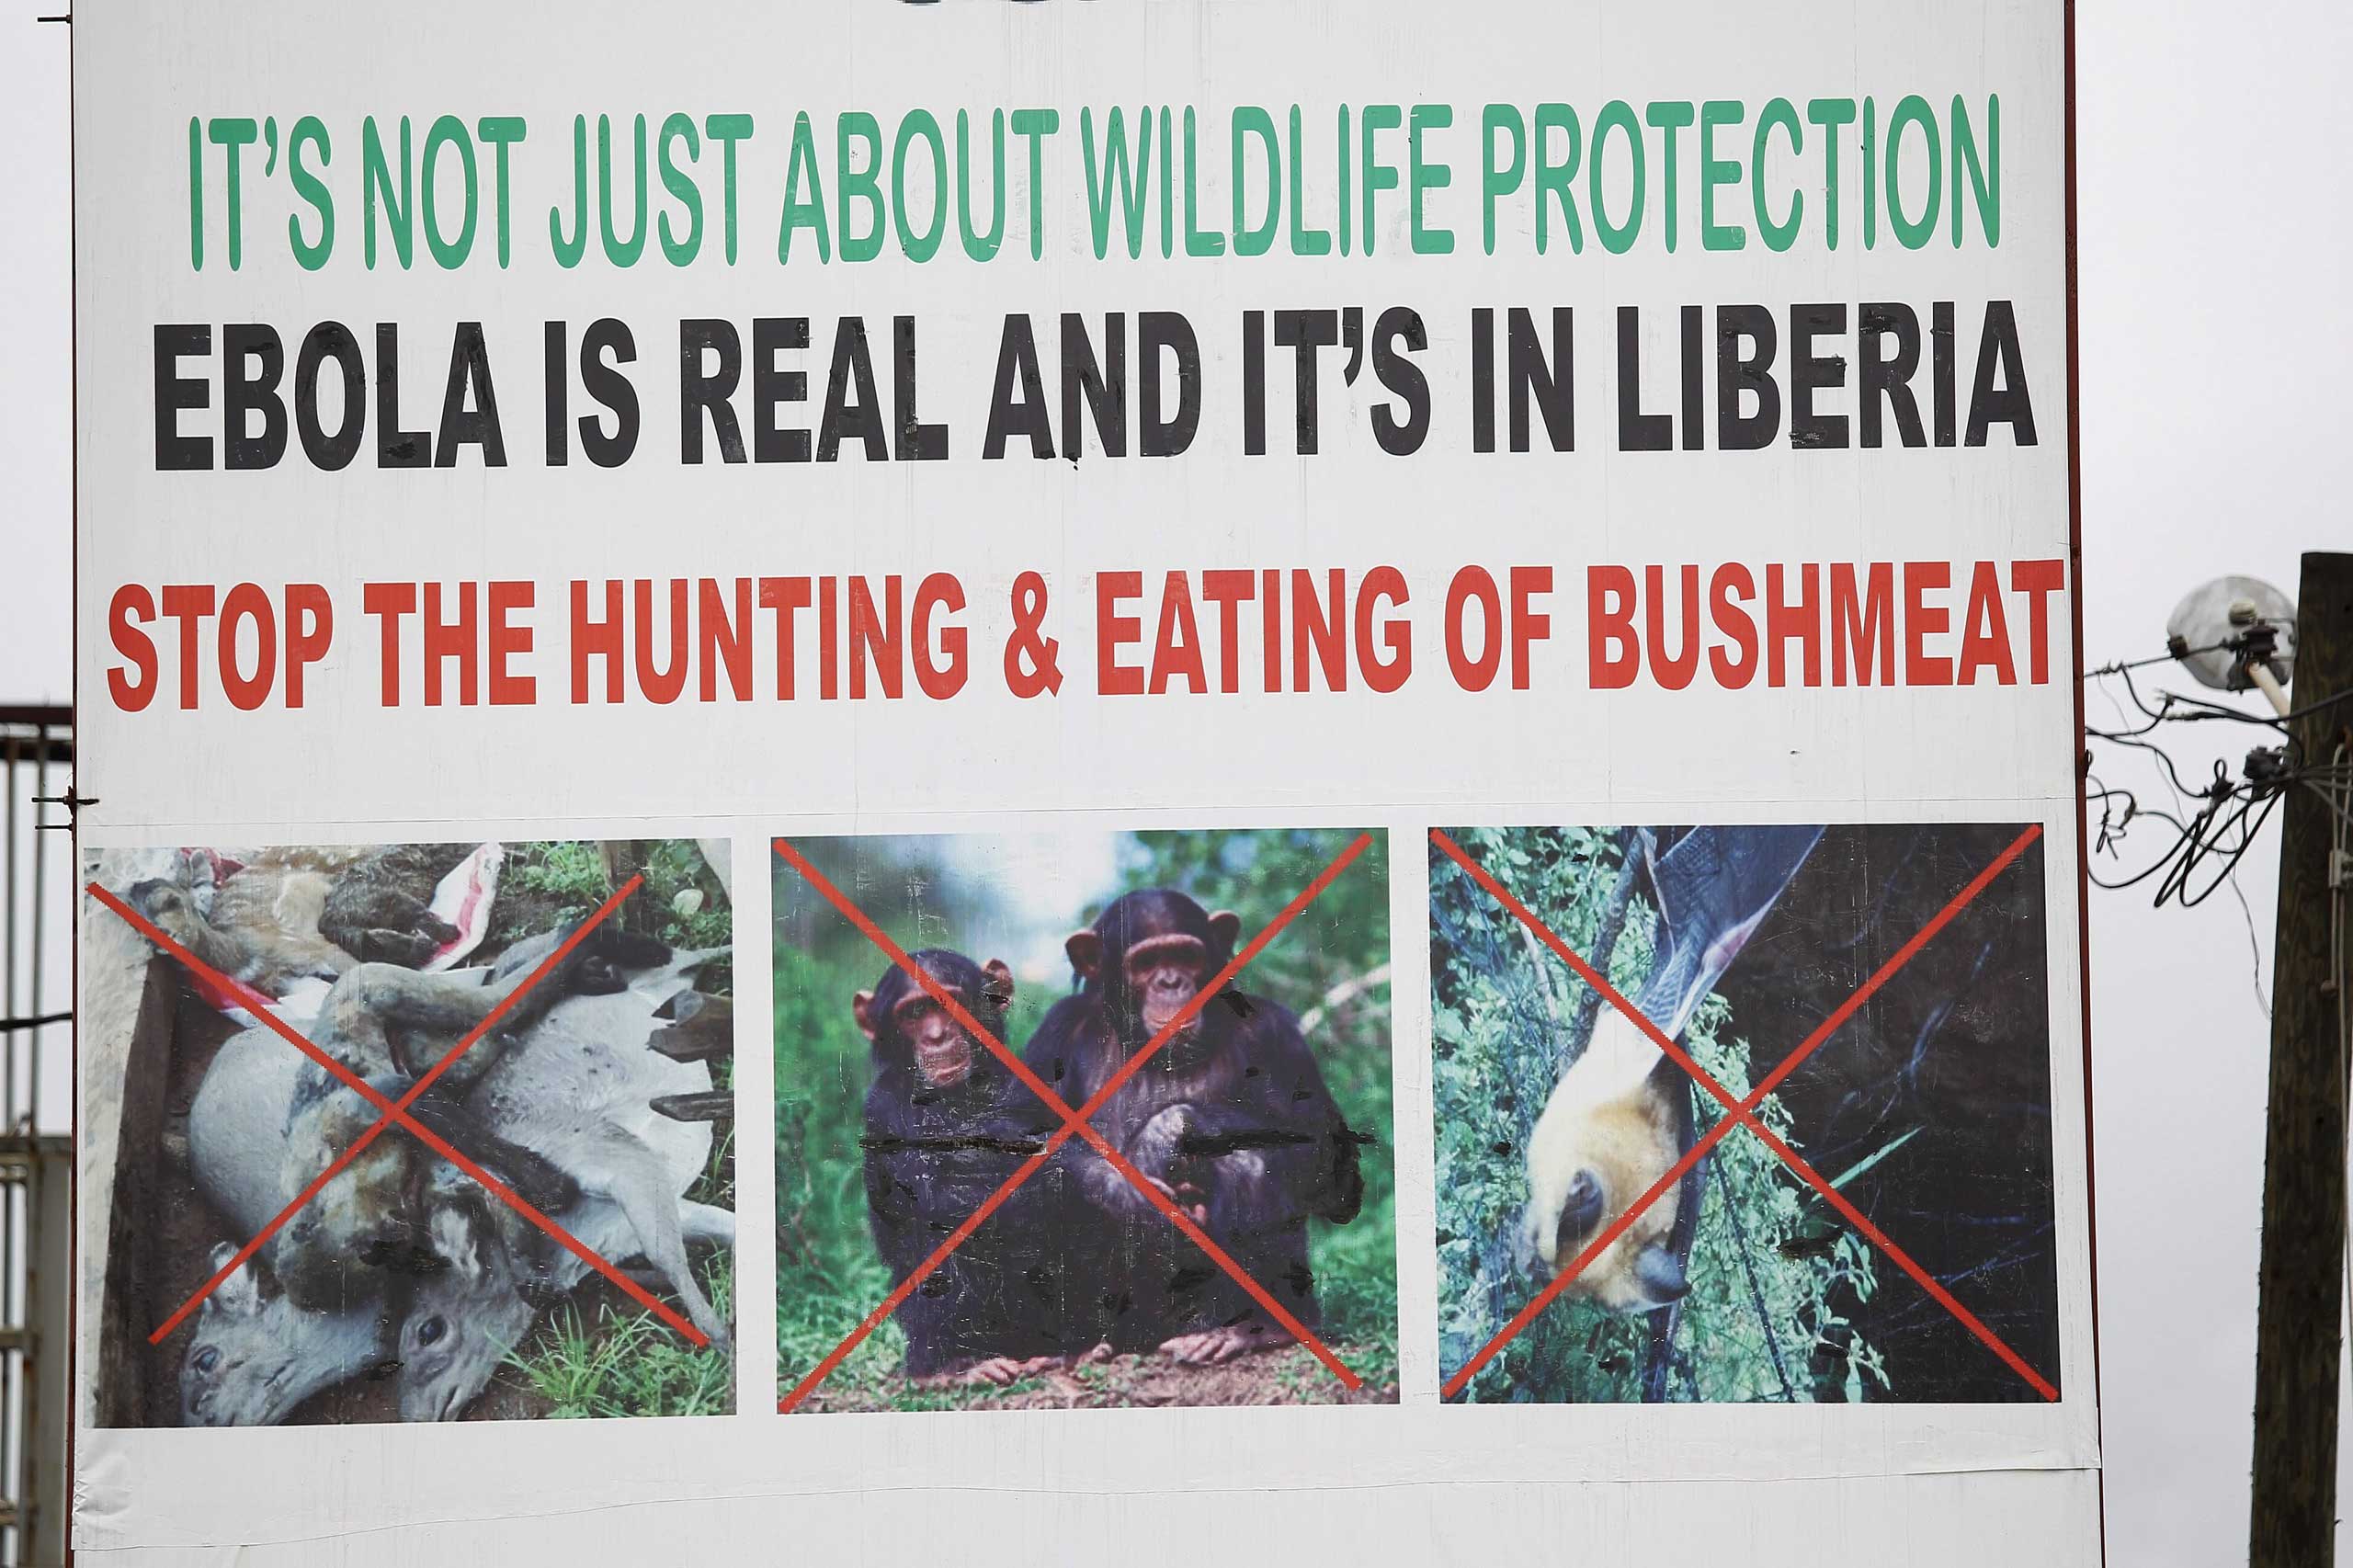 A billboard warning against eating wild animals, seen in Monrovia, Liberia, Oct. 6, 2014. (Ahmed Jallannzo—EPA)